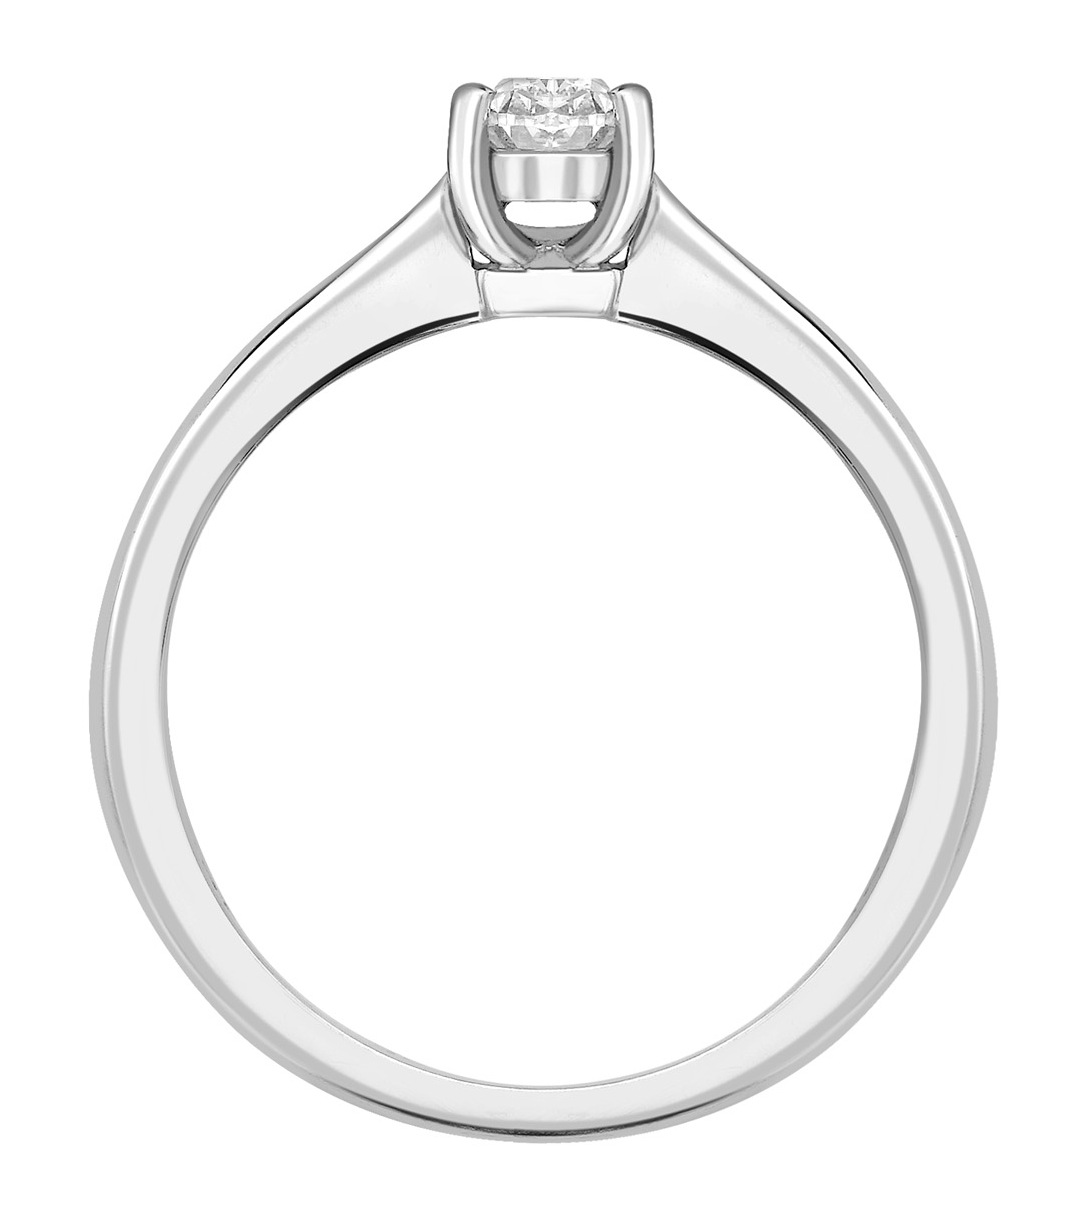 Oval White Gold Diamond Engagement Ring GRC575 Image 2